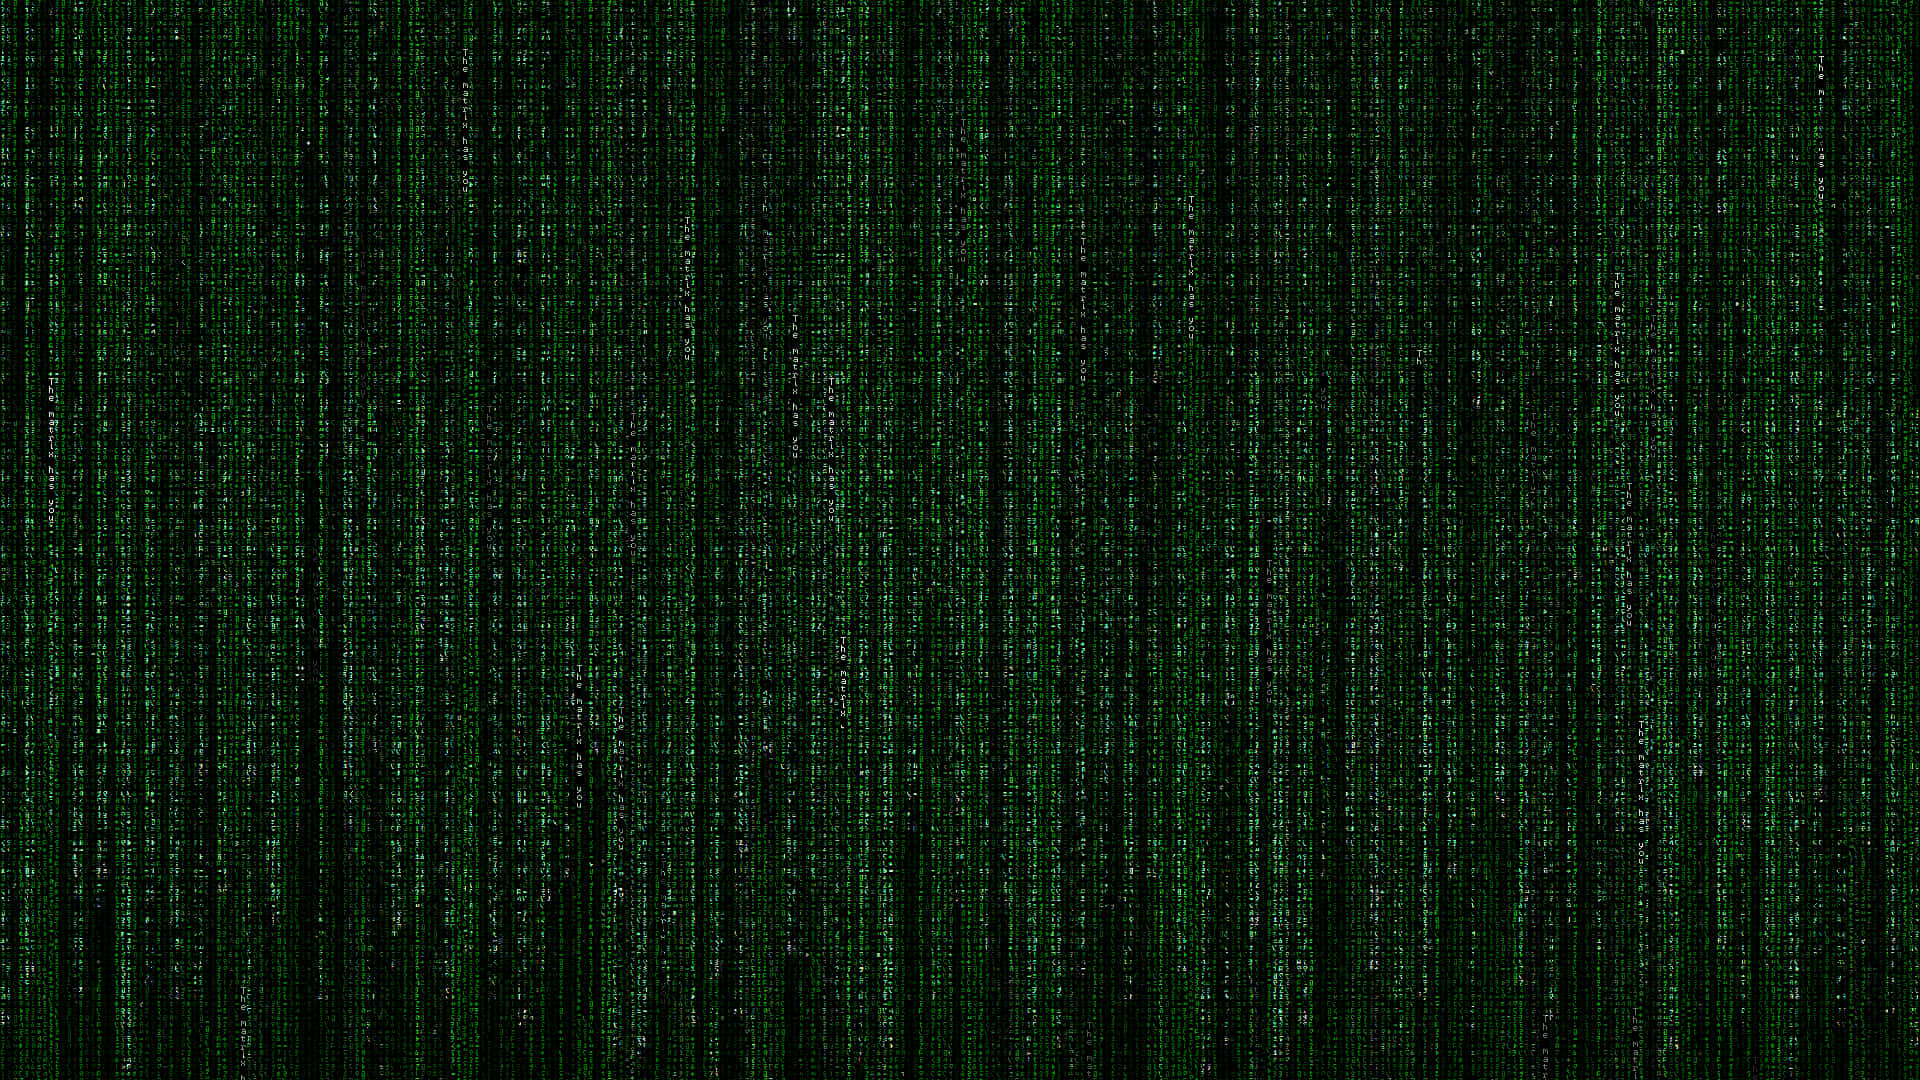 Unlock the mystery of the Matrix